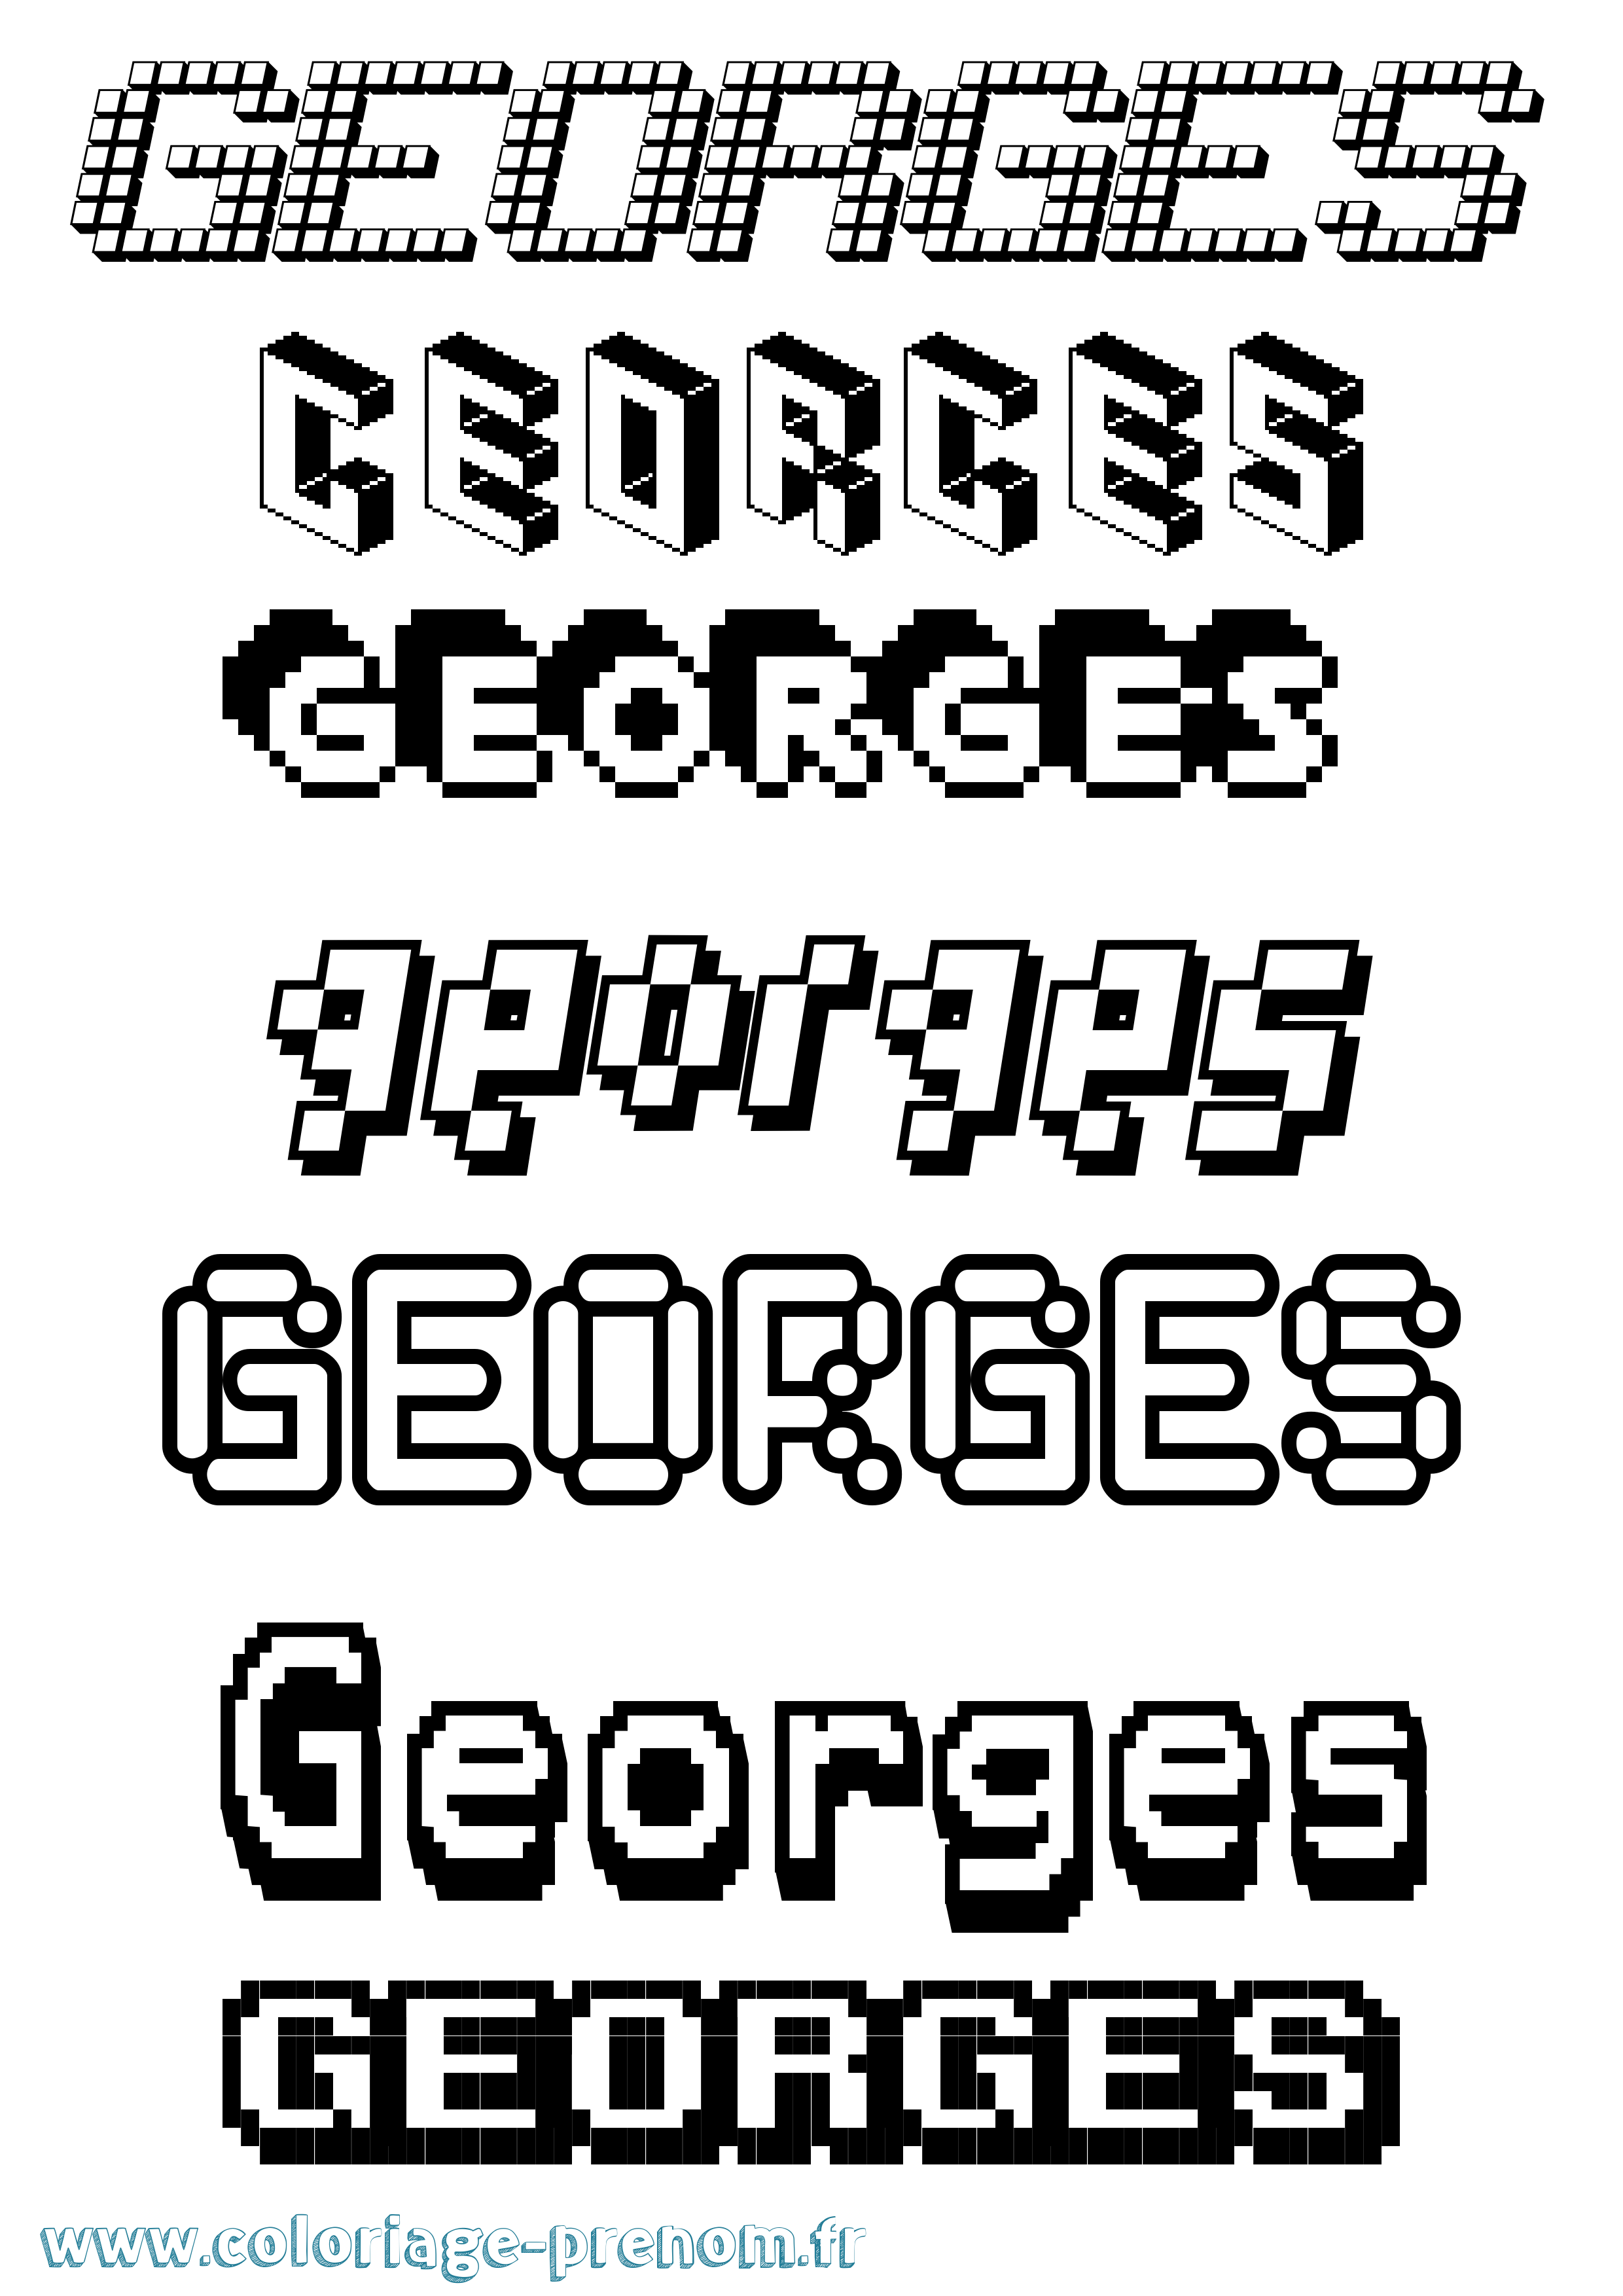 Coloriage prénom Georges